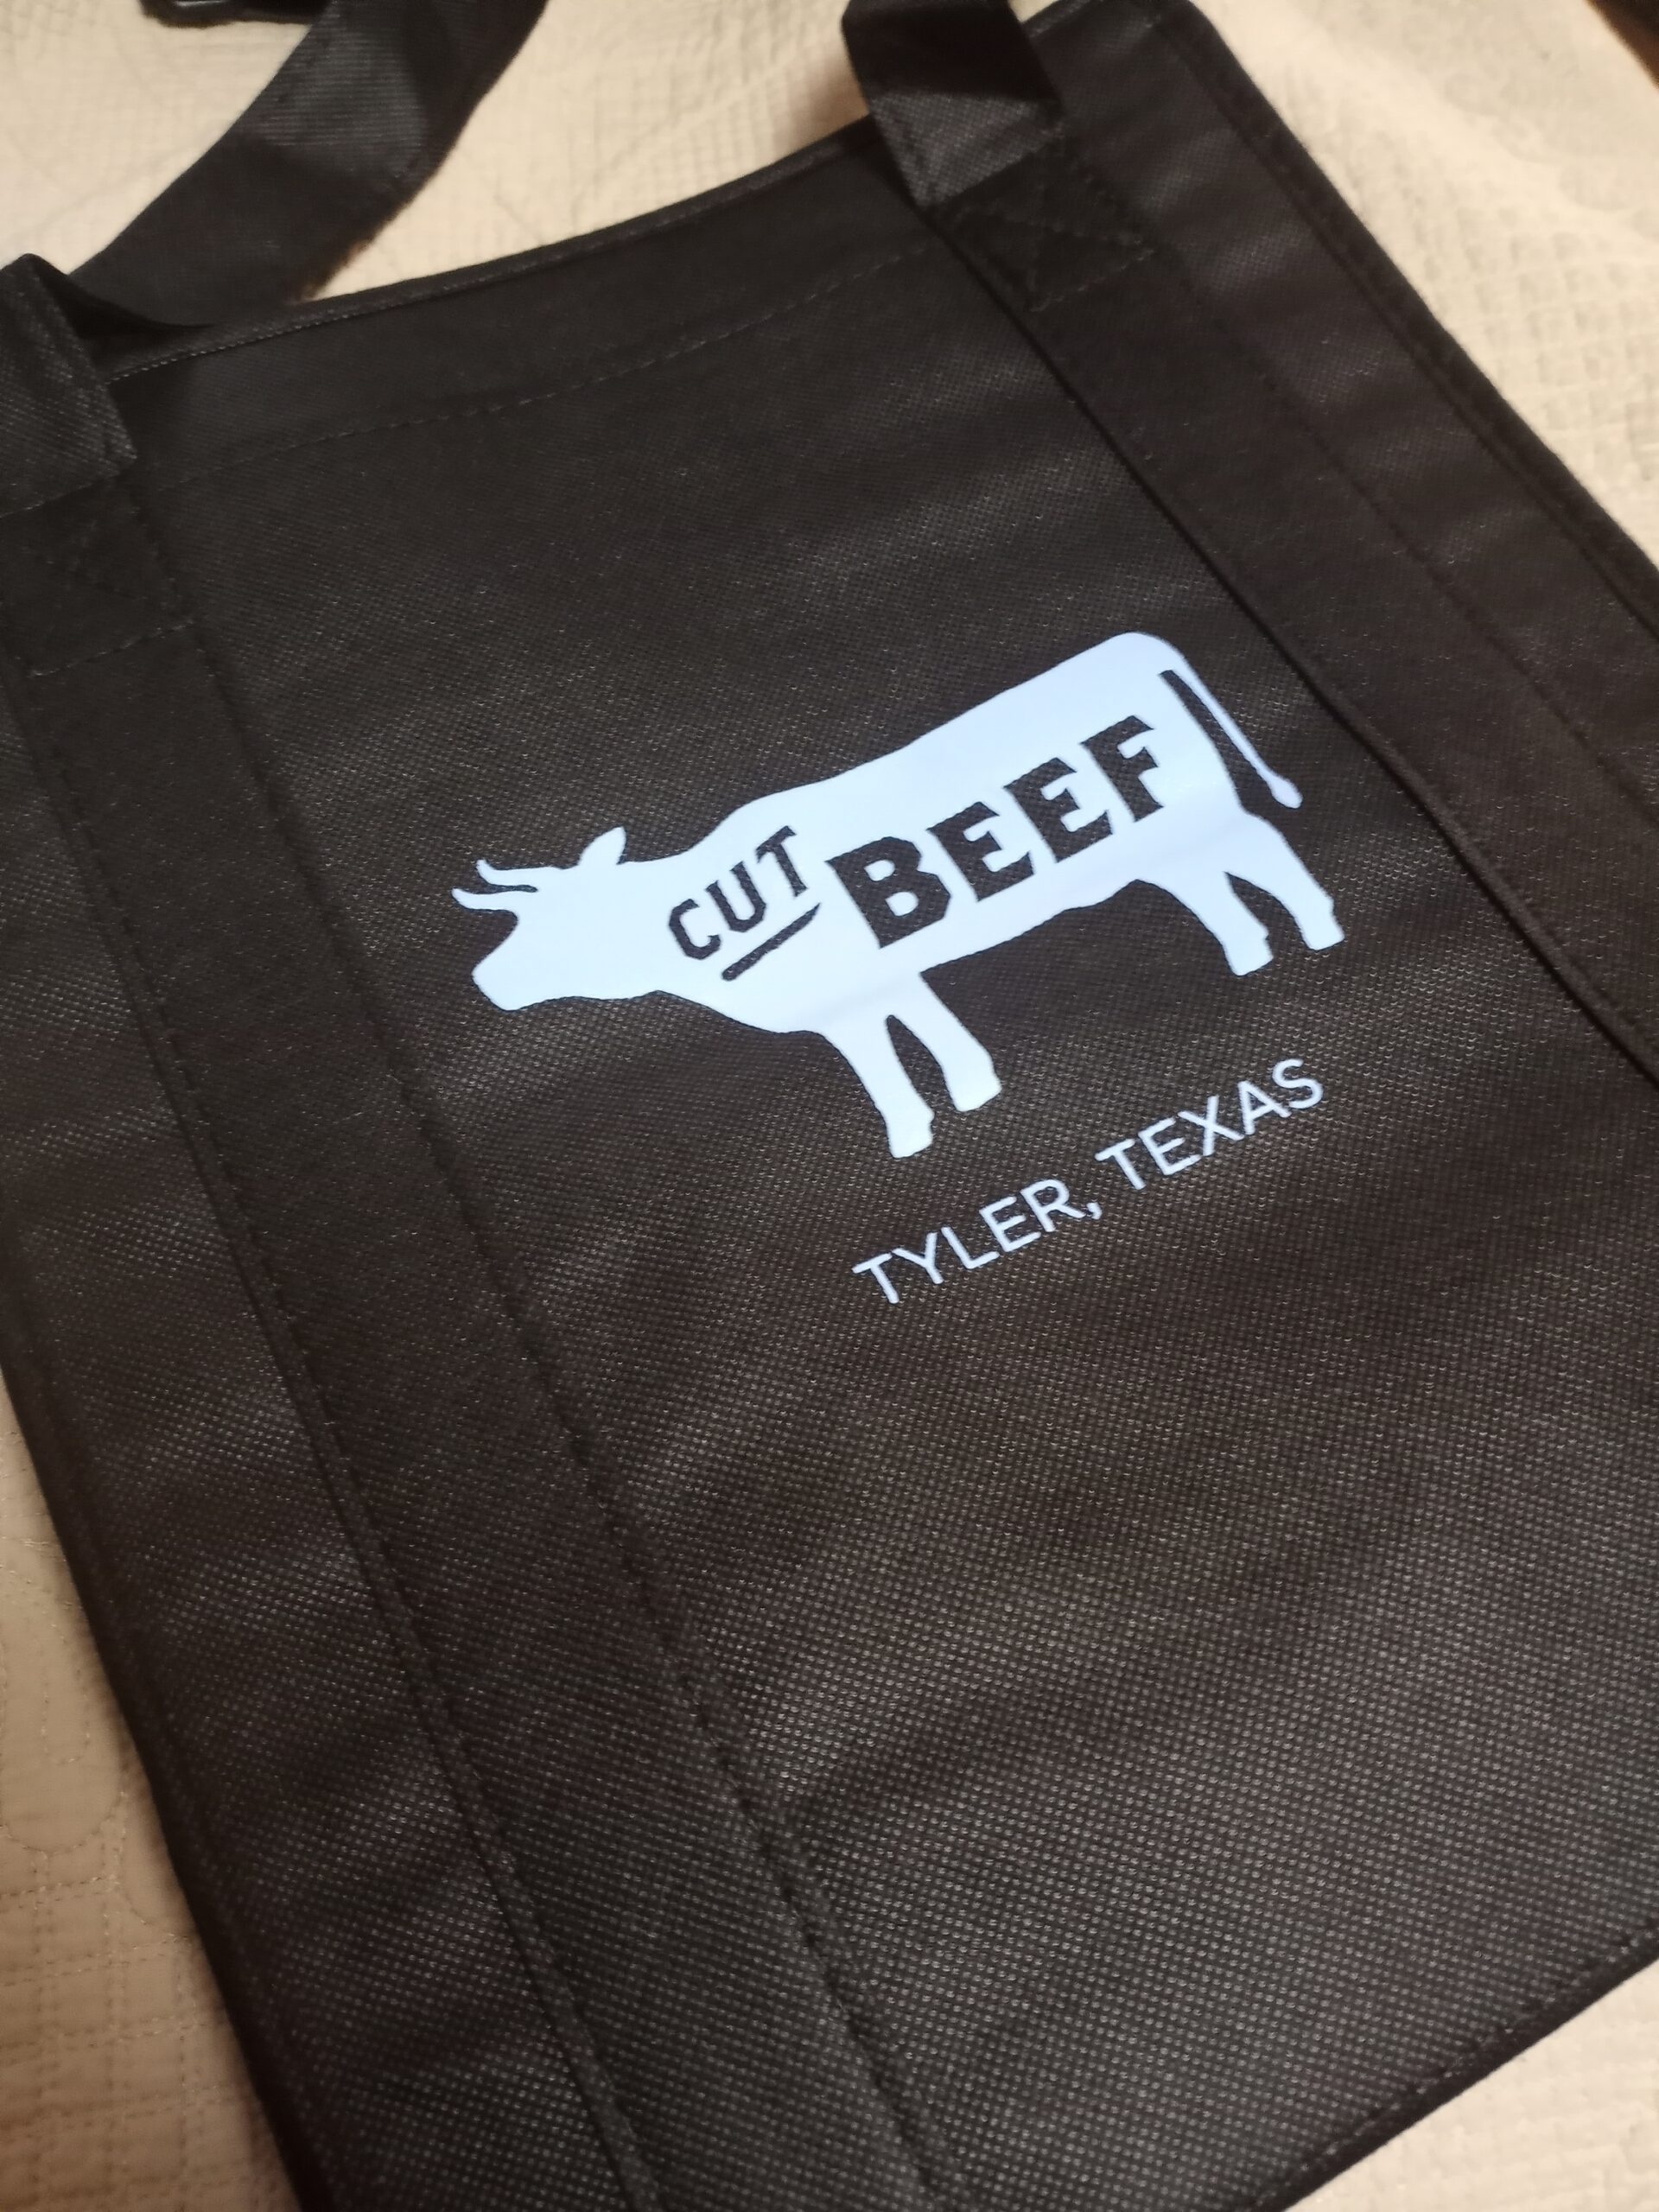 Cut Beef, Tyler, Texas, insulated shopping bag.